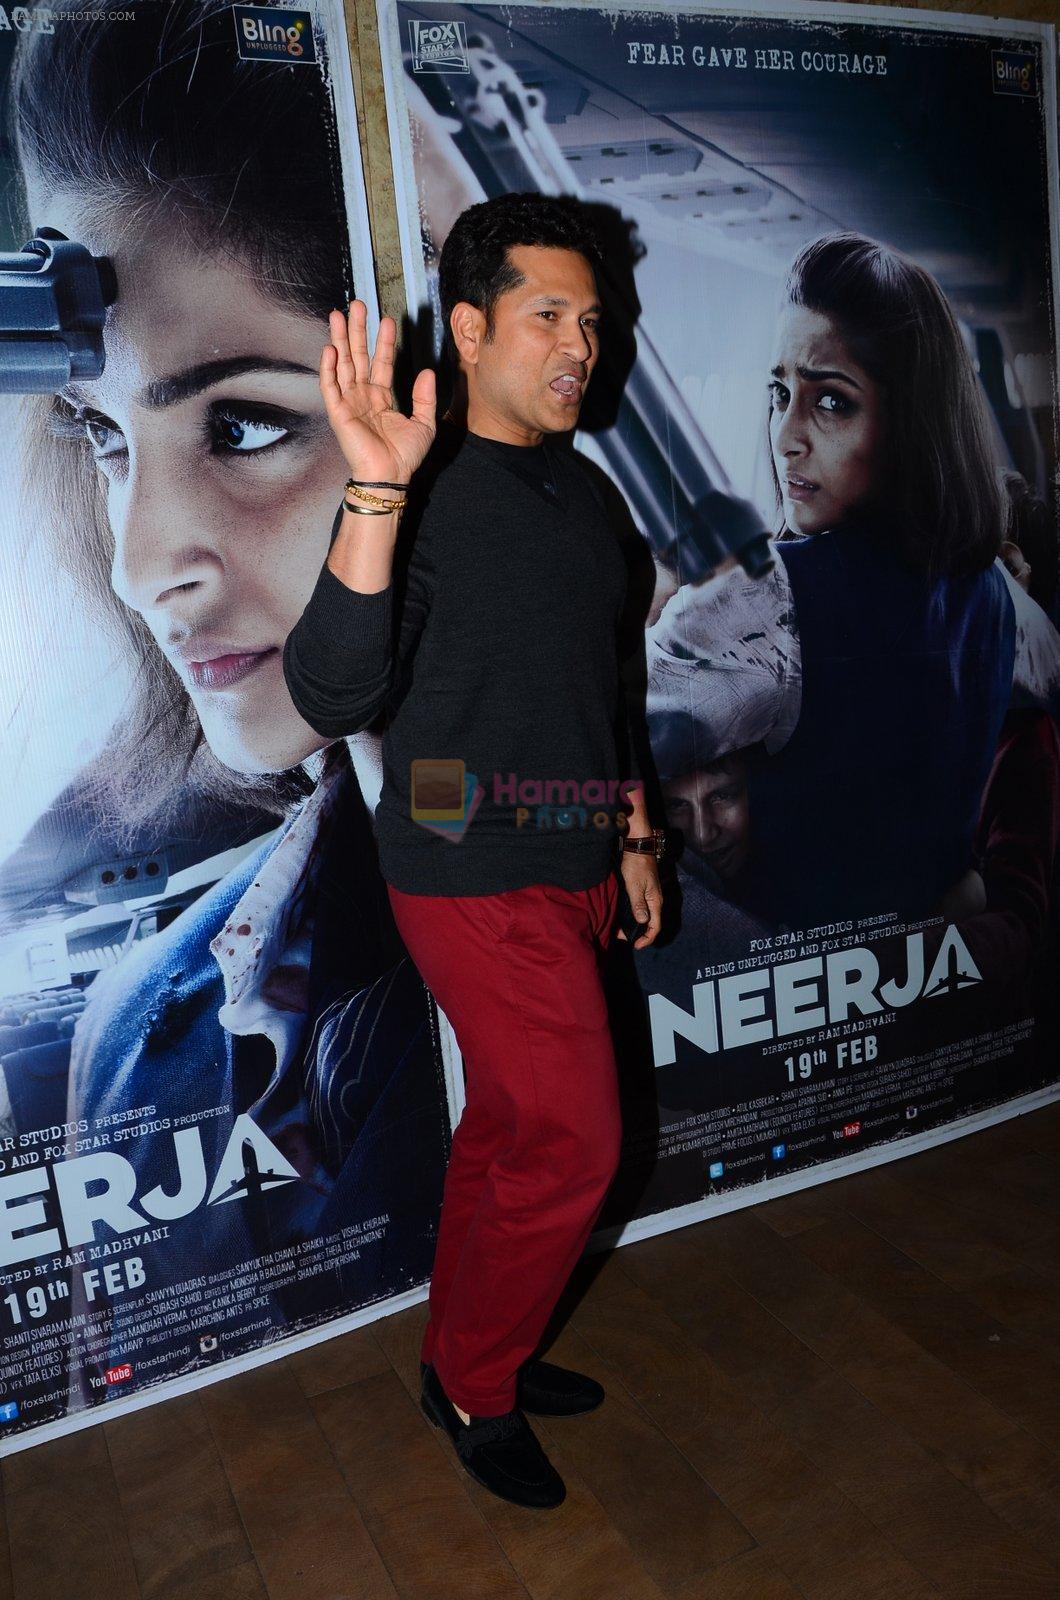 Sachin Tendulkar at Neerja Screening in Mumbai on 15th Feb 2016